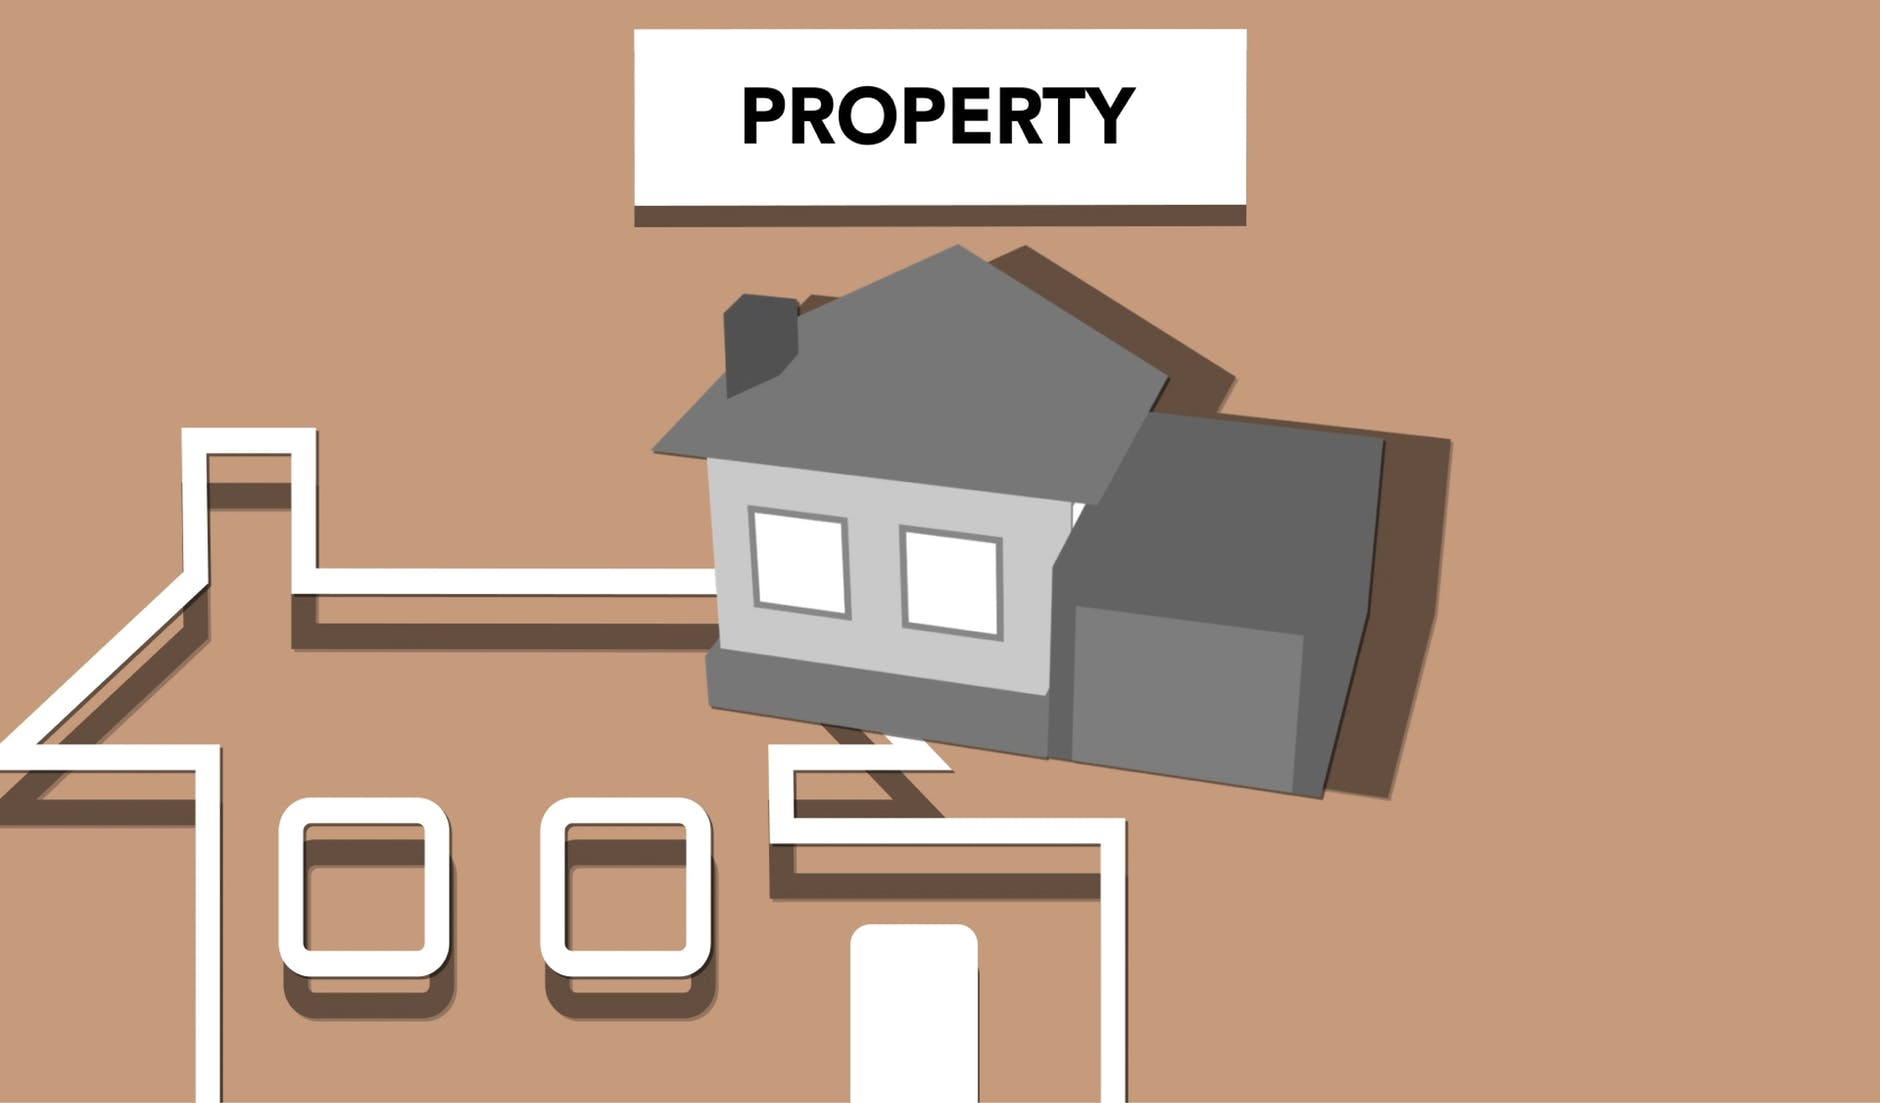 residential house representing property on illustration, smart money bro